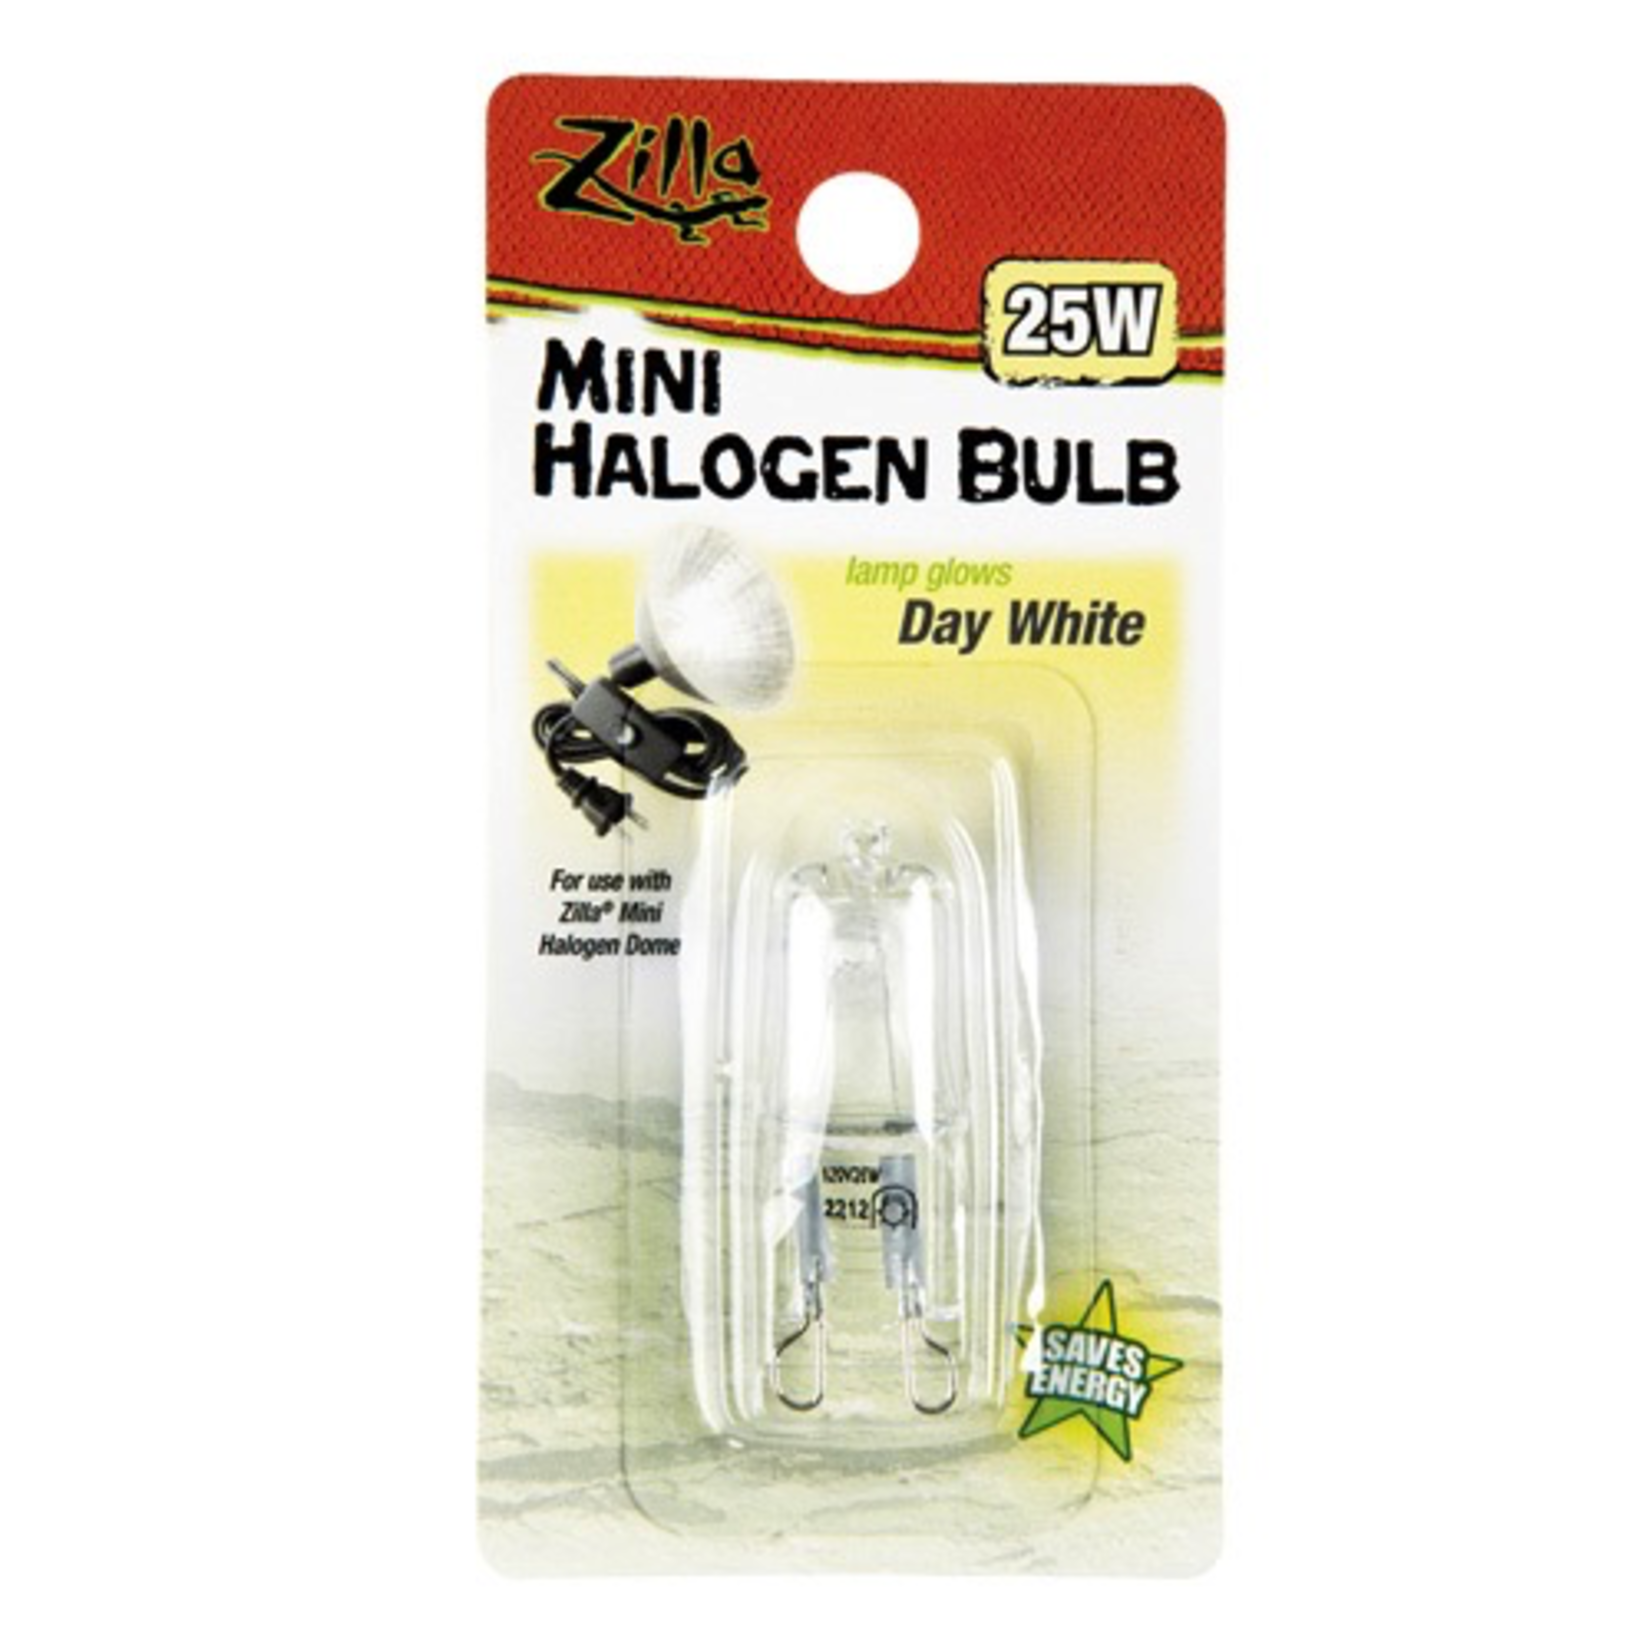 ZILLA (W) Mini Halogen Bulb - Day White - 25 W